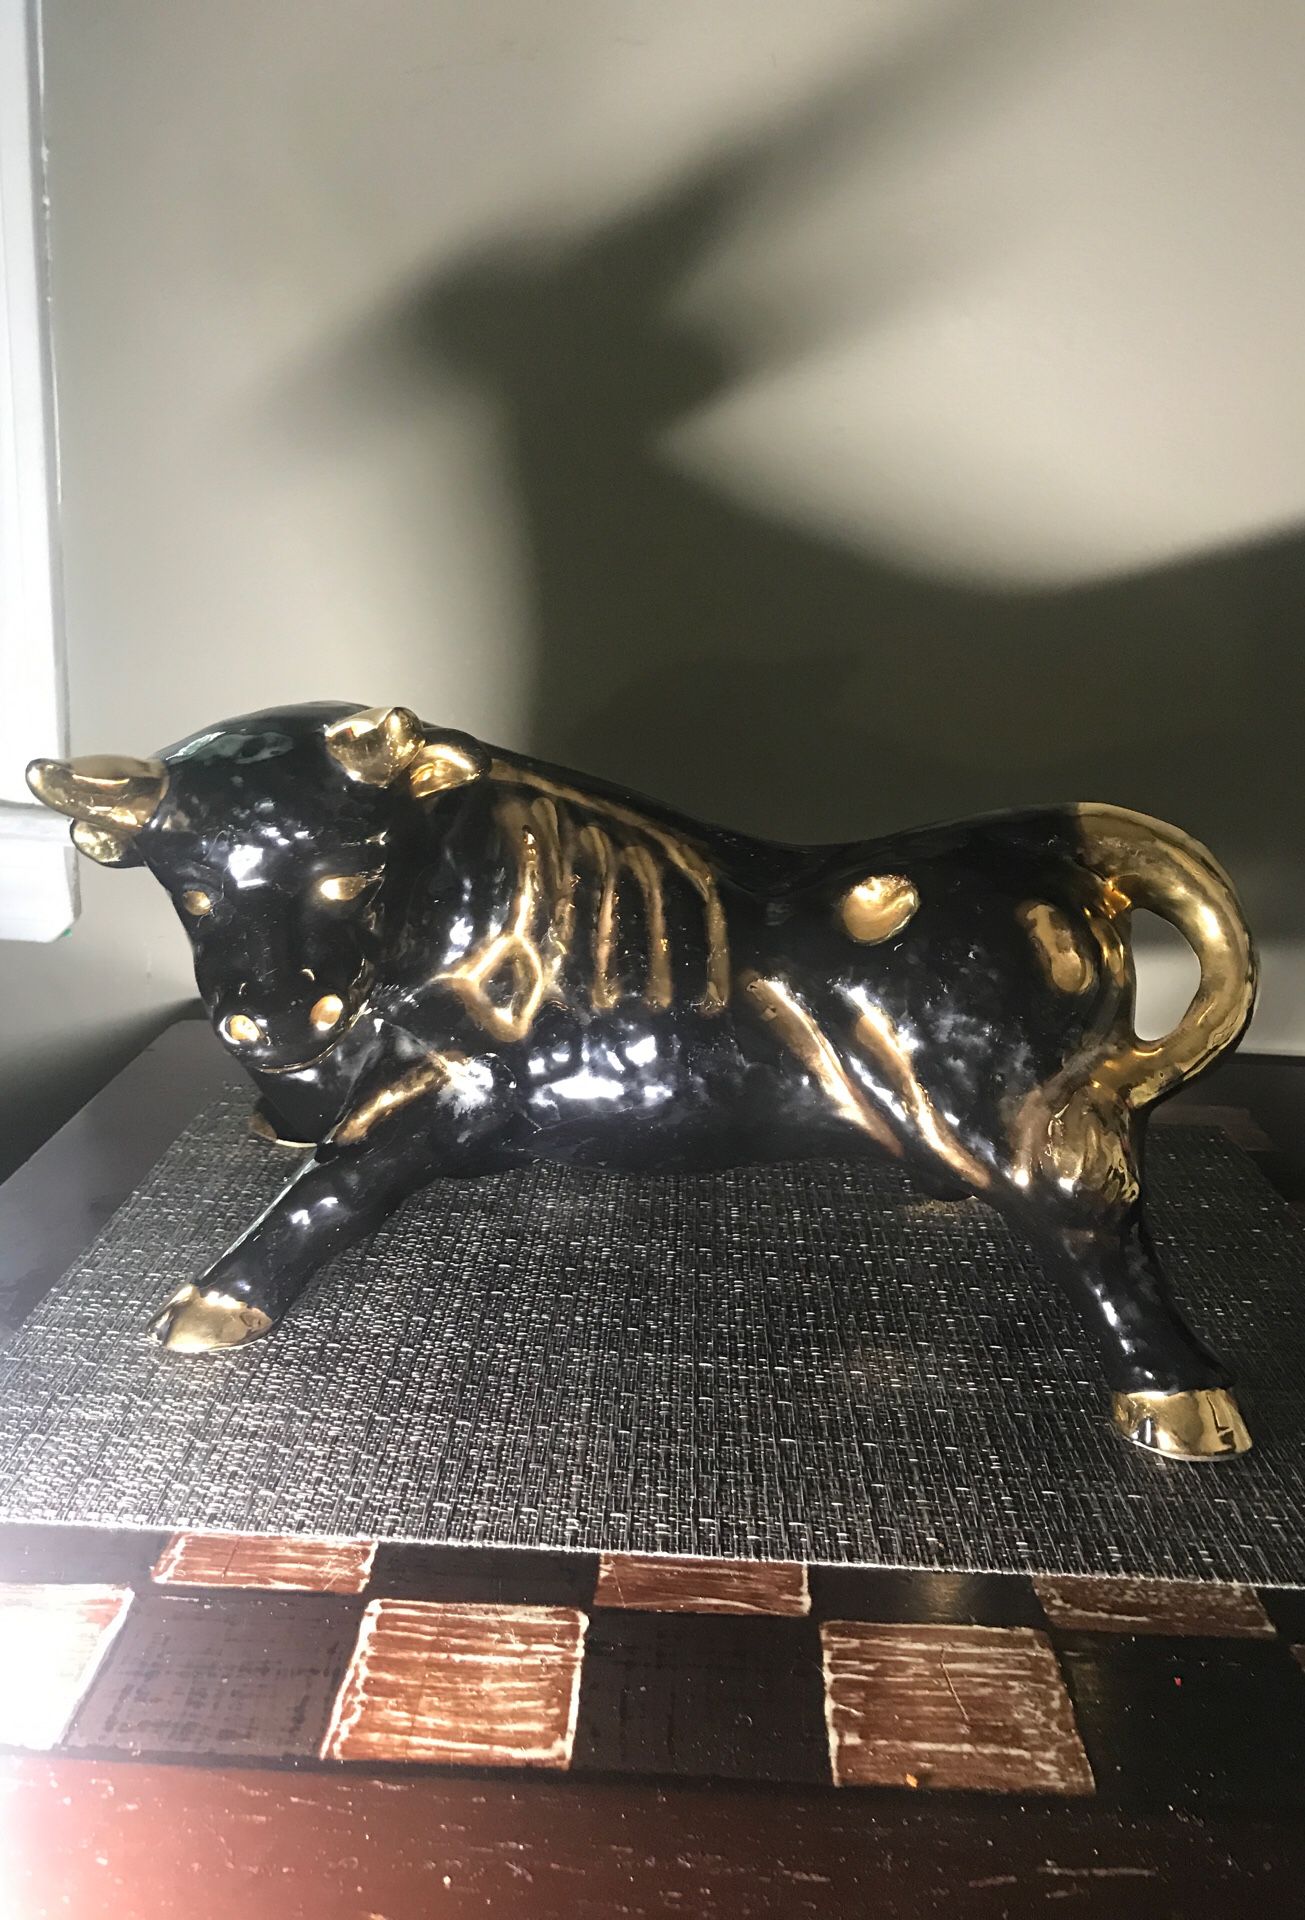 Bull sculpture/decoration